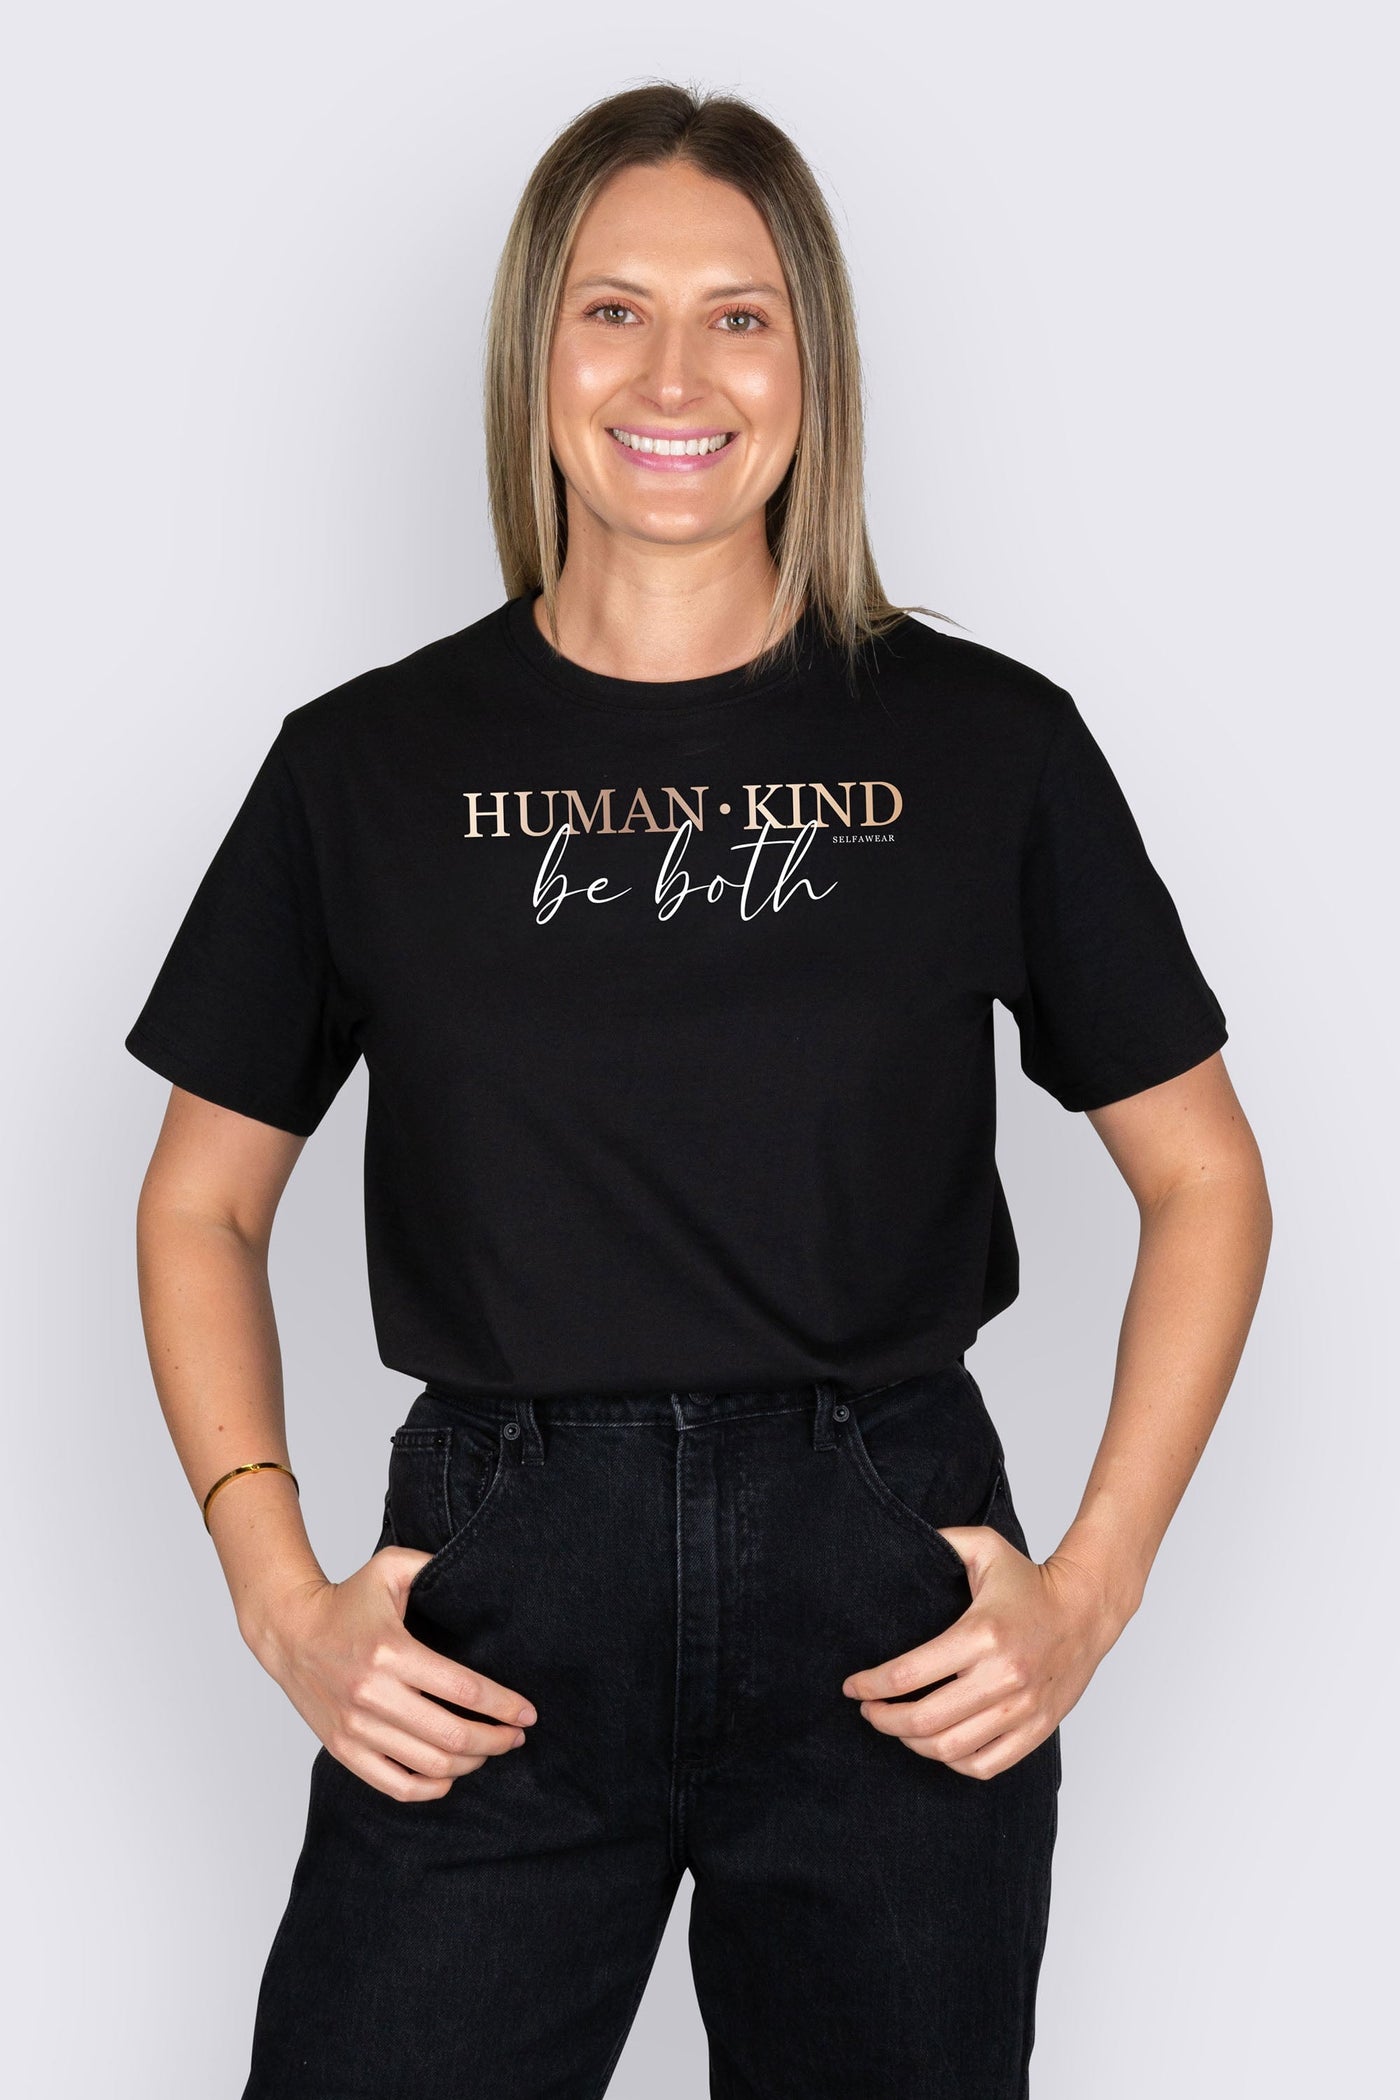 Human Kind, Be Both T-Shirt Black Shirts Selfawear 